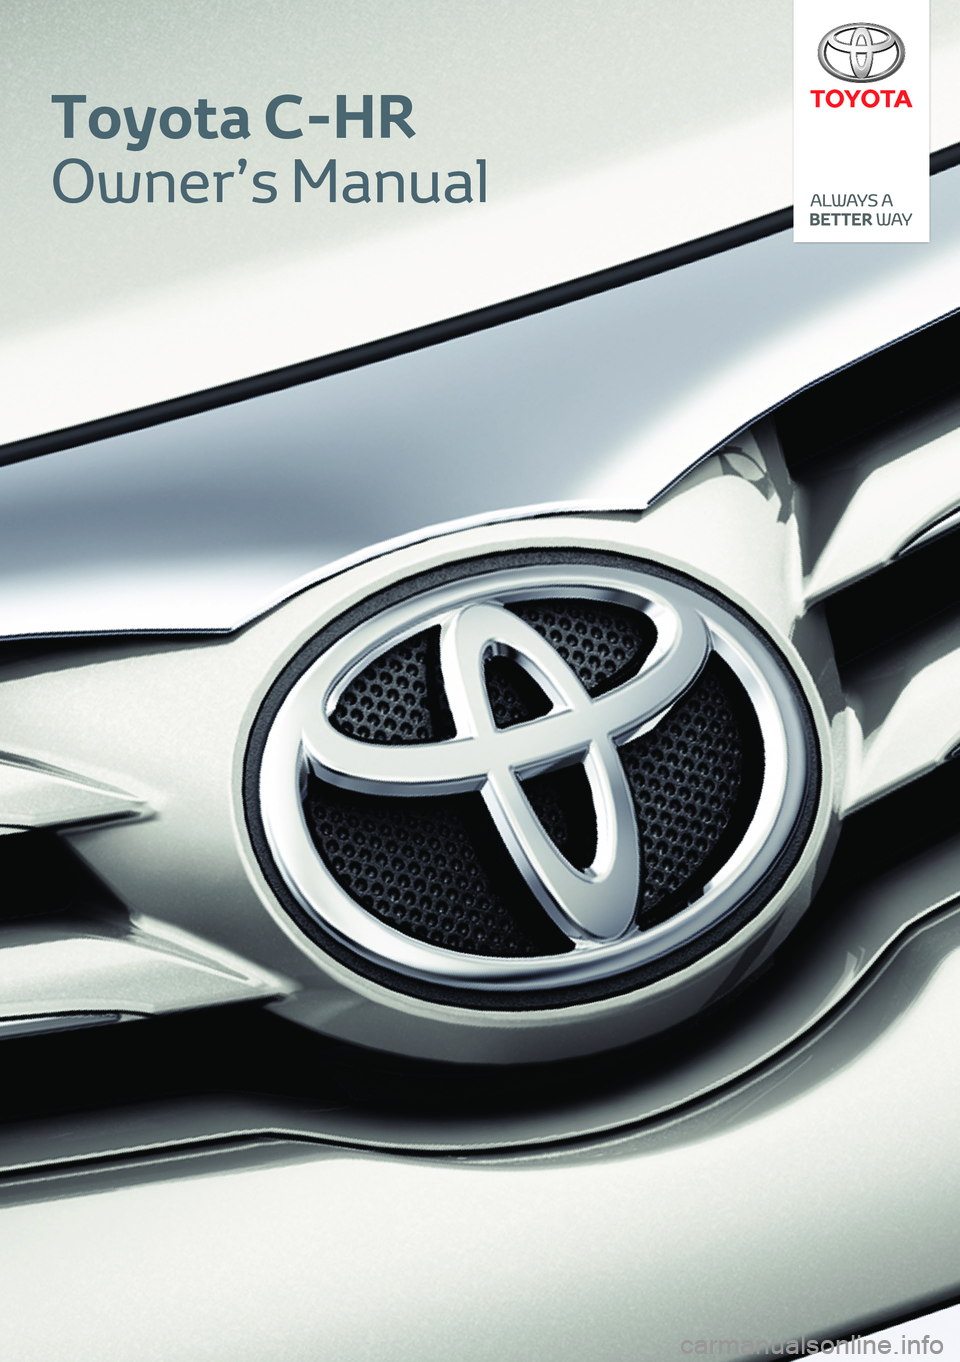 TOYOTA C-HR 2022  Manuale de Empleo (in Spanish) Toyota C-HR
Owner’s Manual 